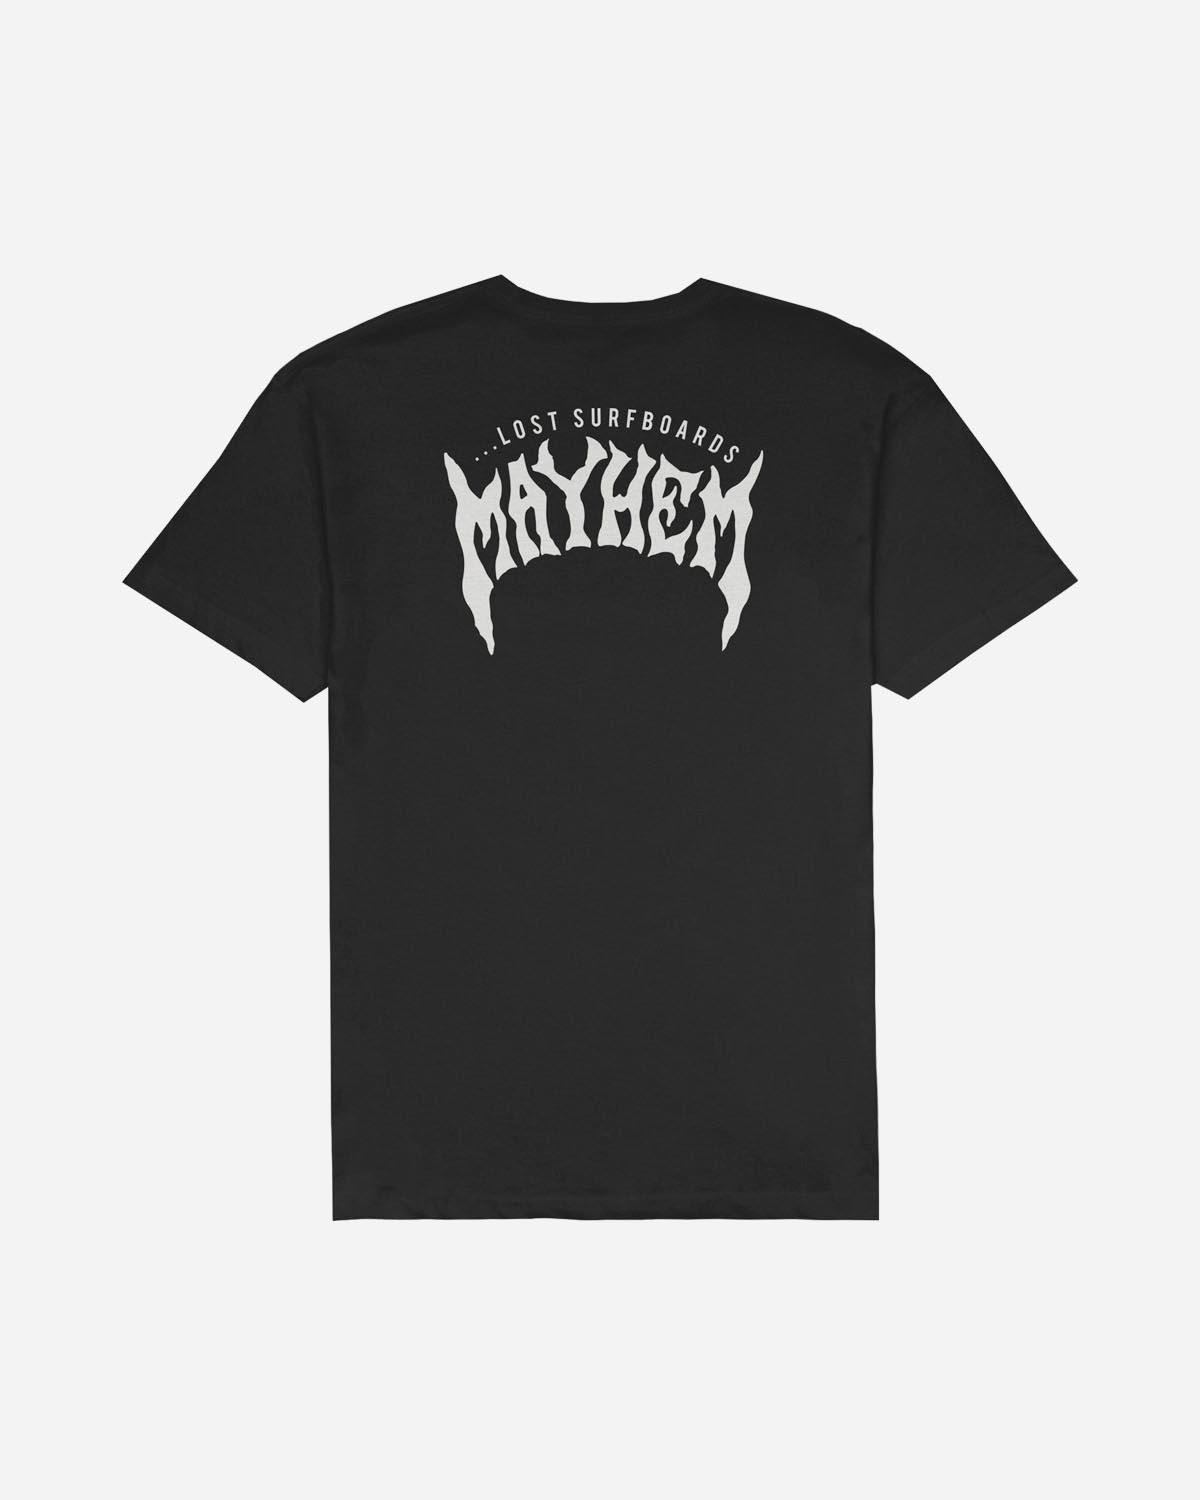 Mayhem Designs Tee Black - Lost Enterprises